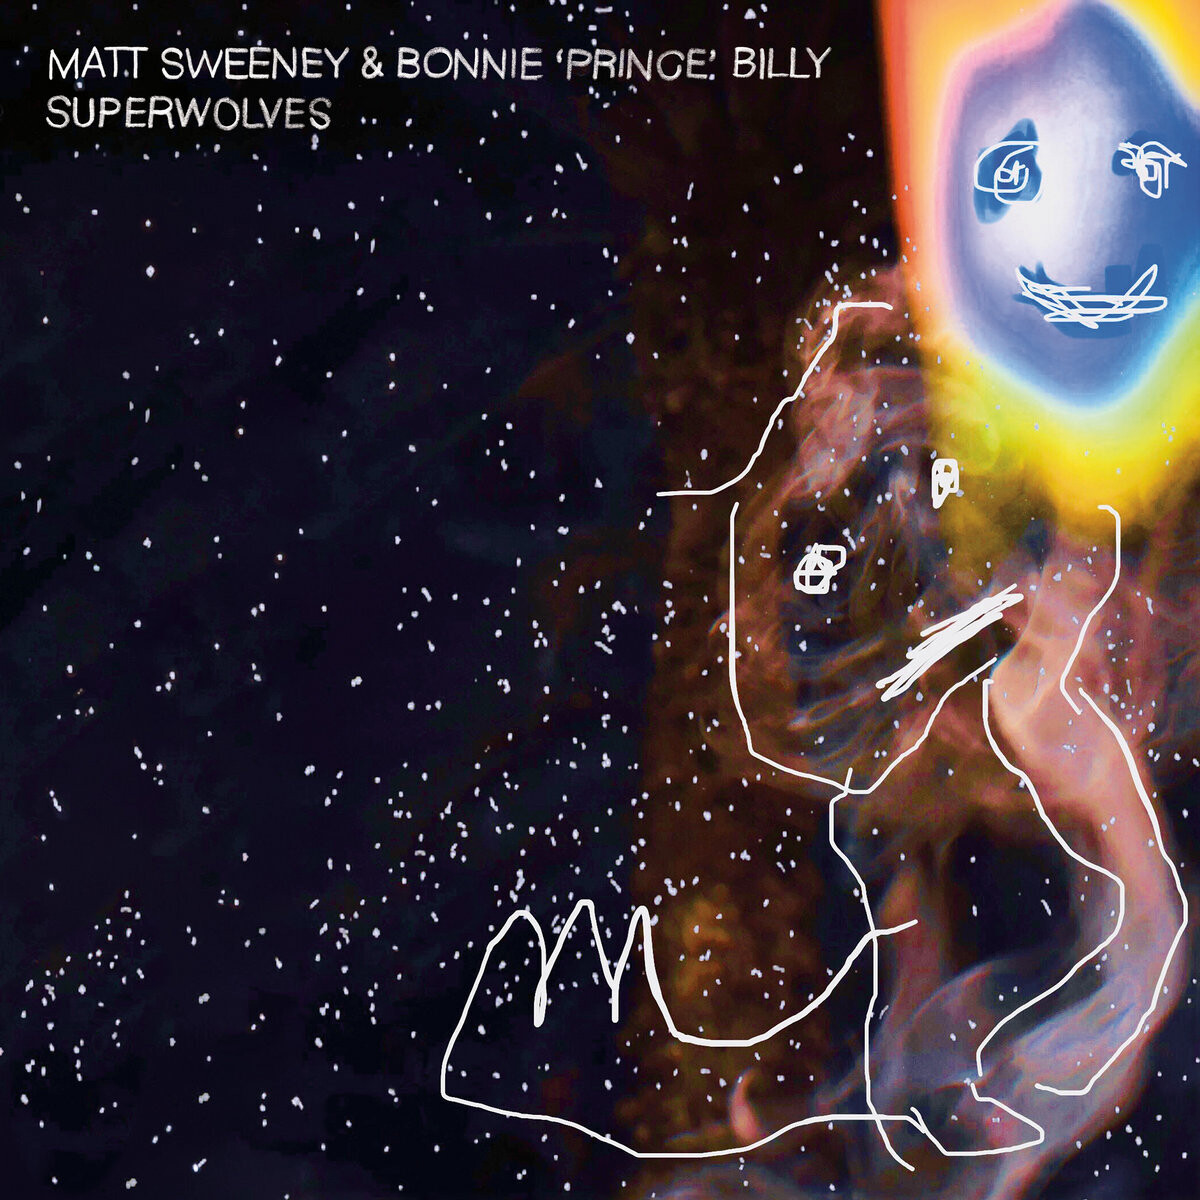 Matt Sweeney & Bonnie 'Prince' Billy "Superwolves"